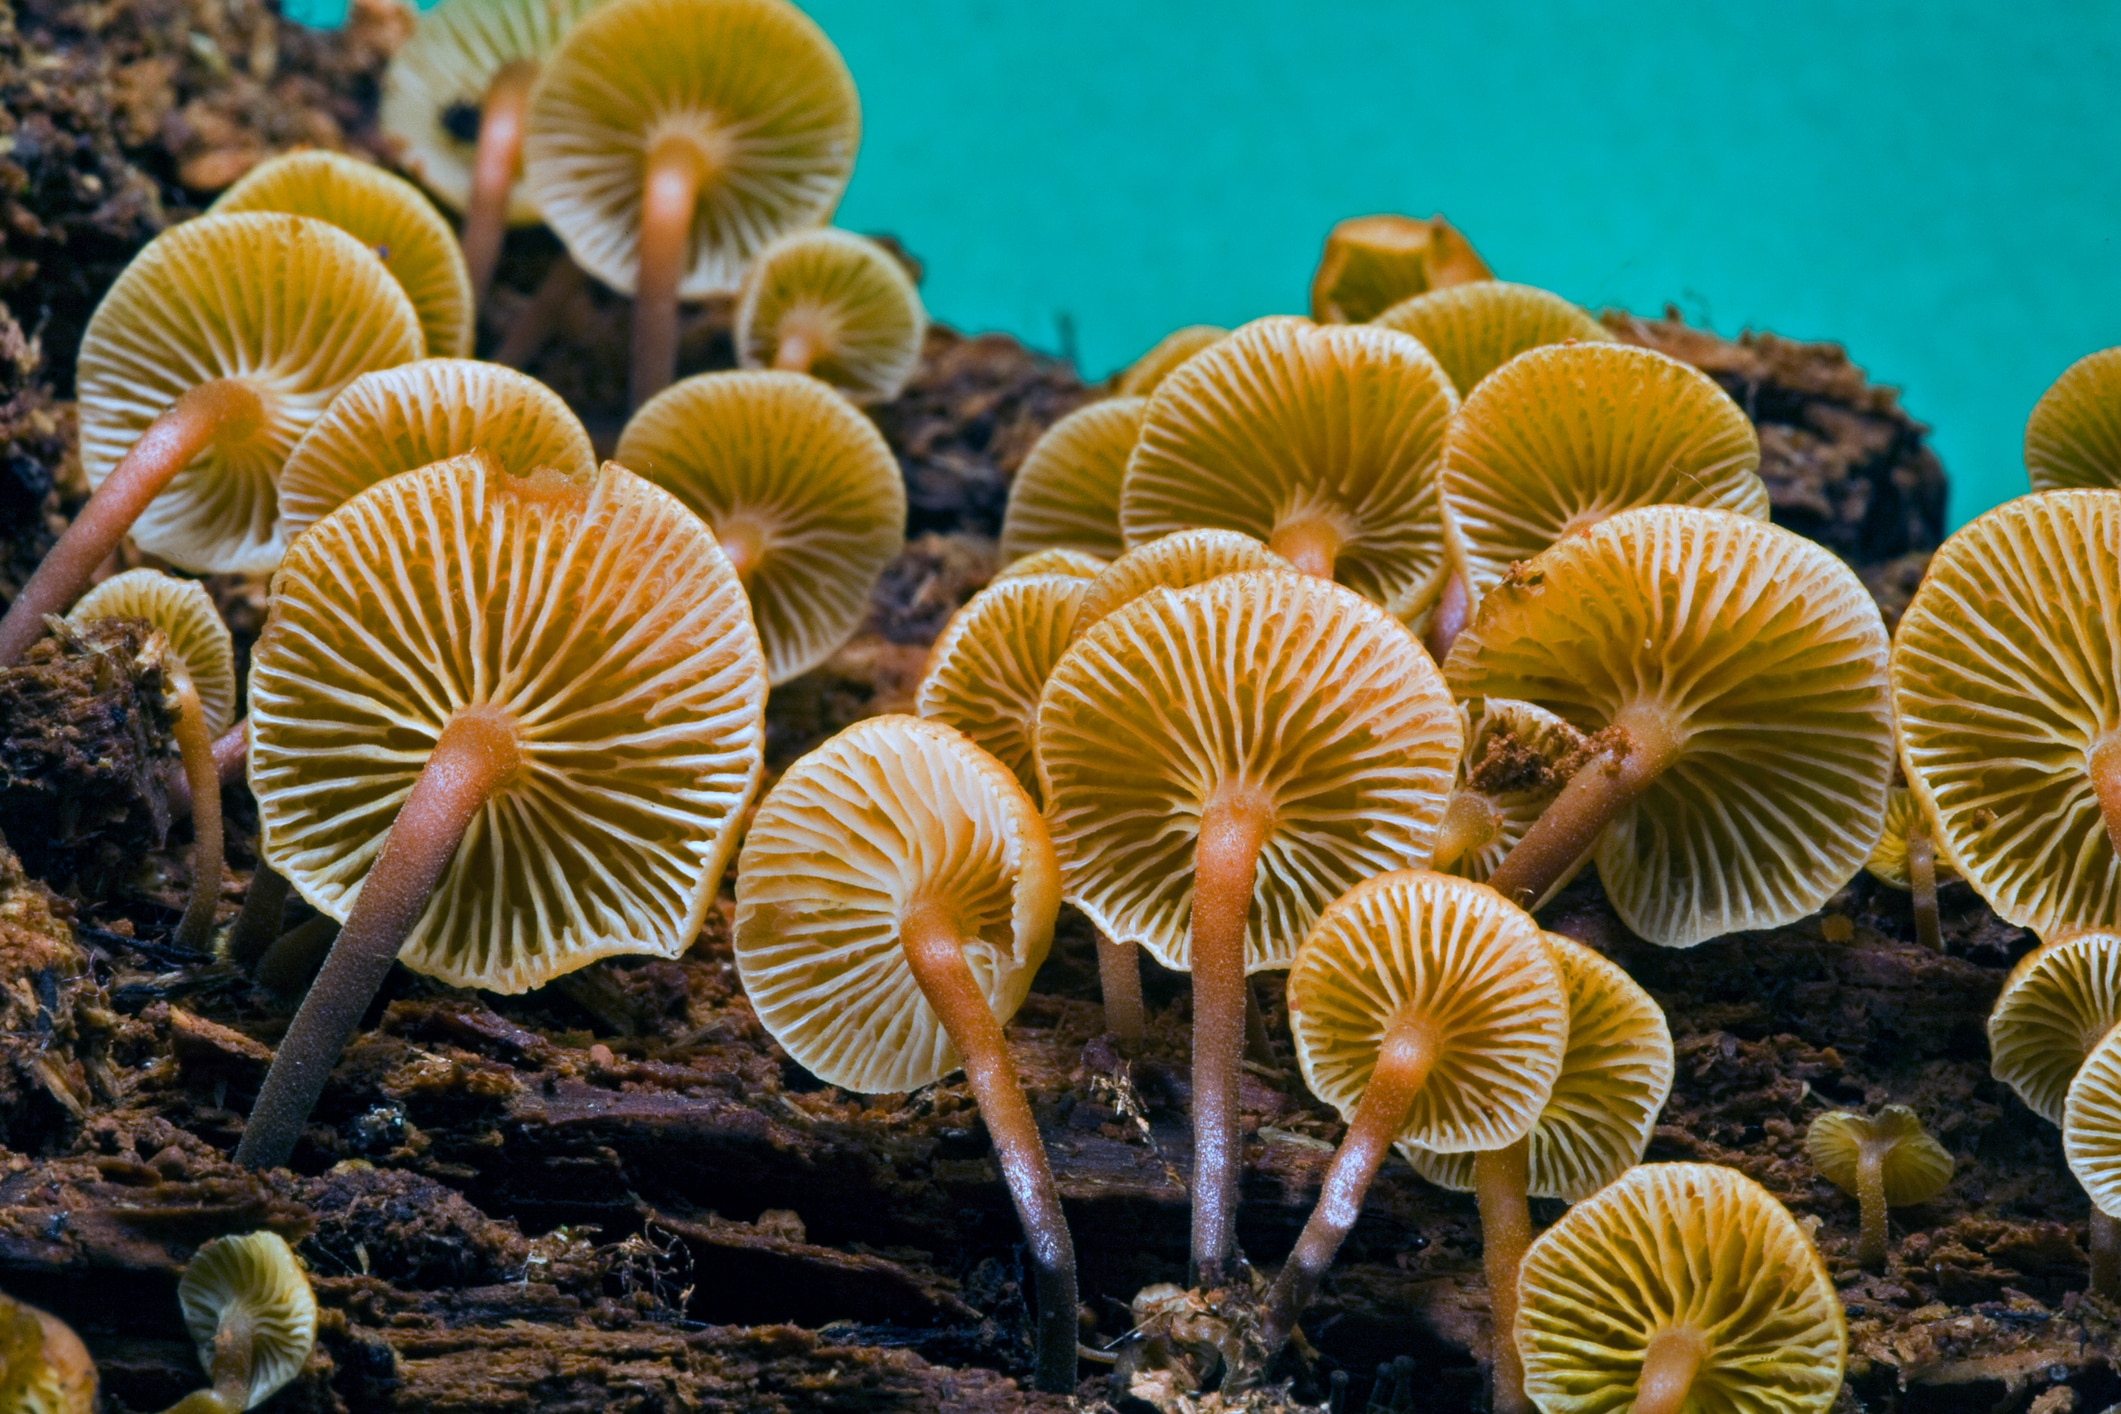 5 examples of fungi